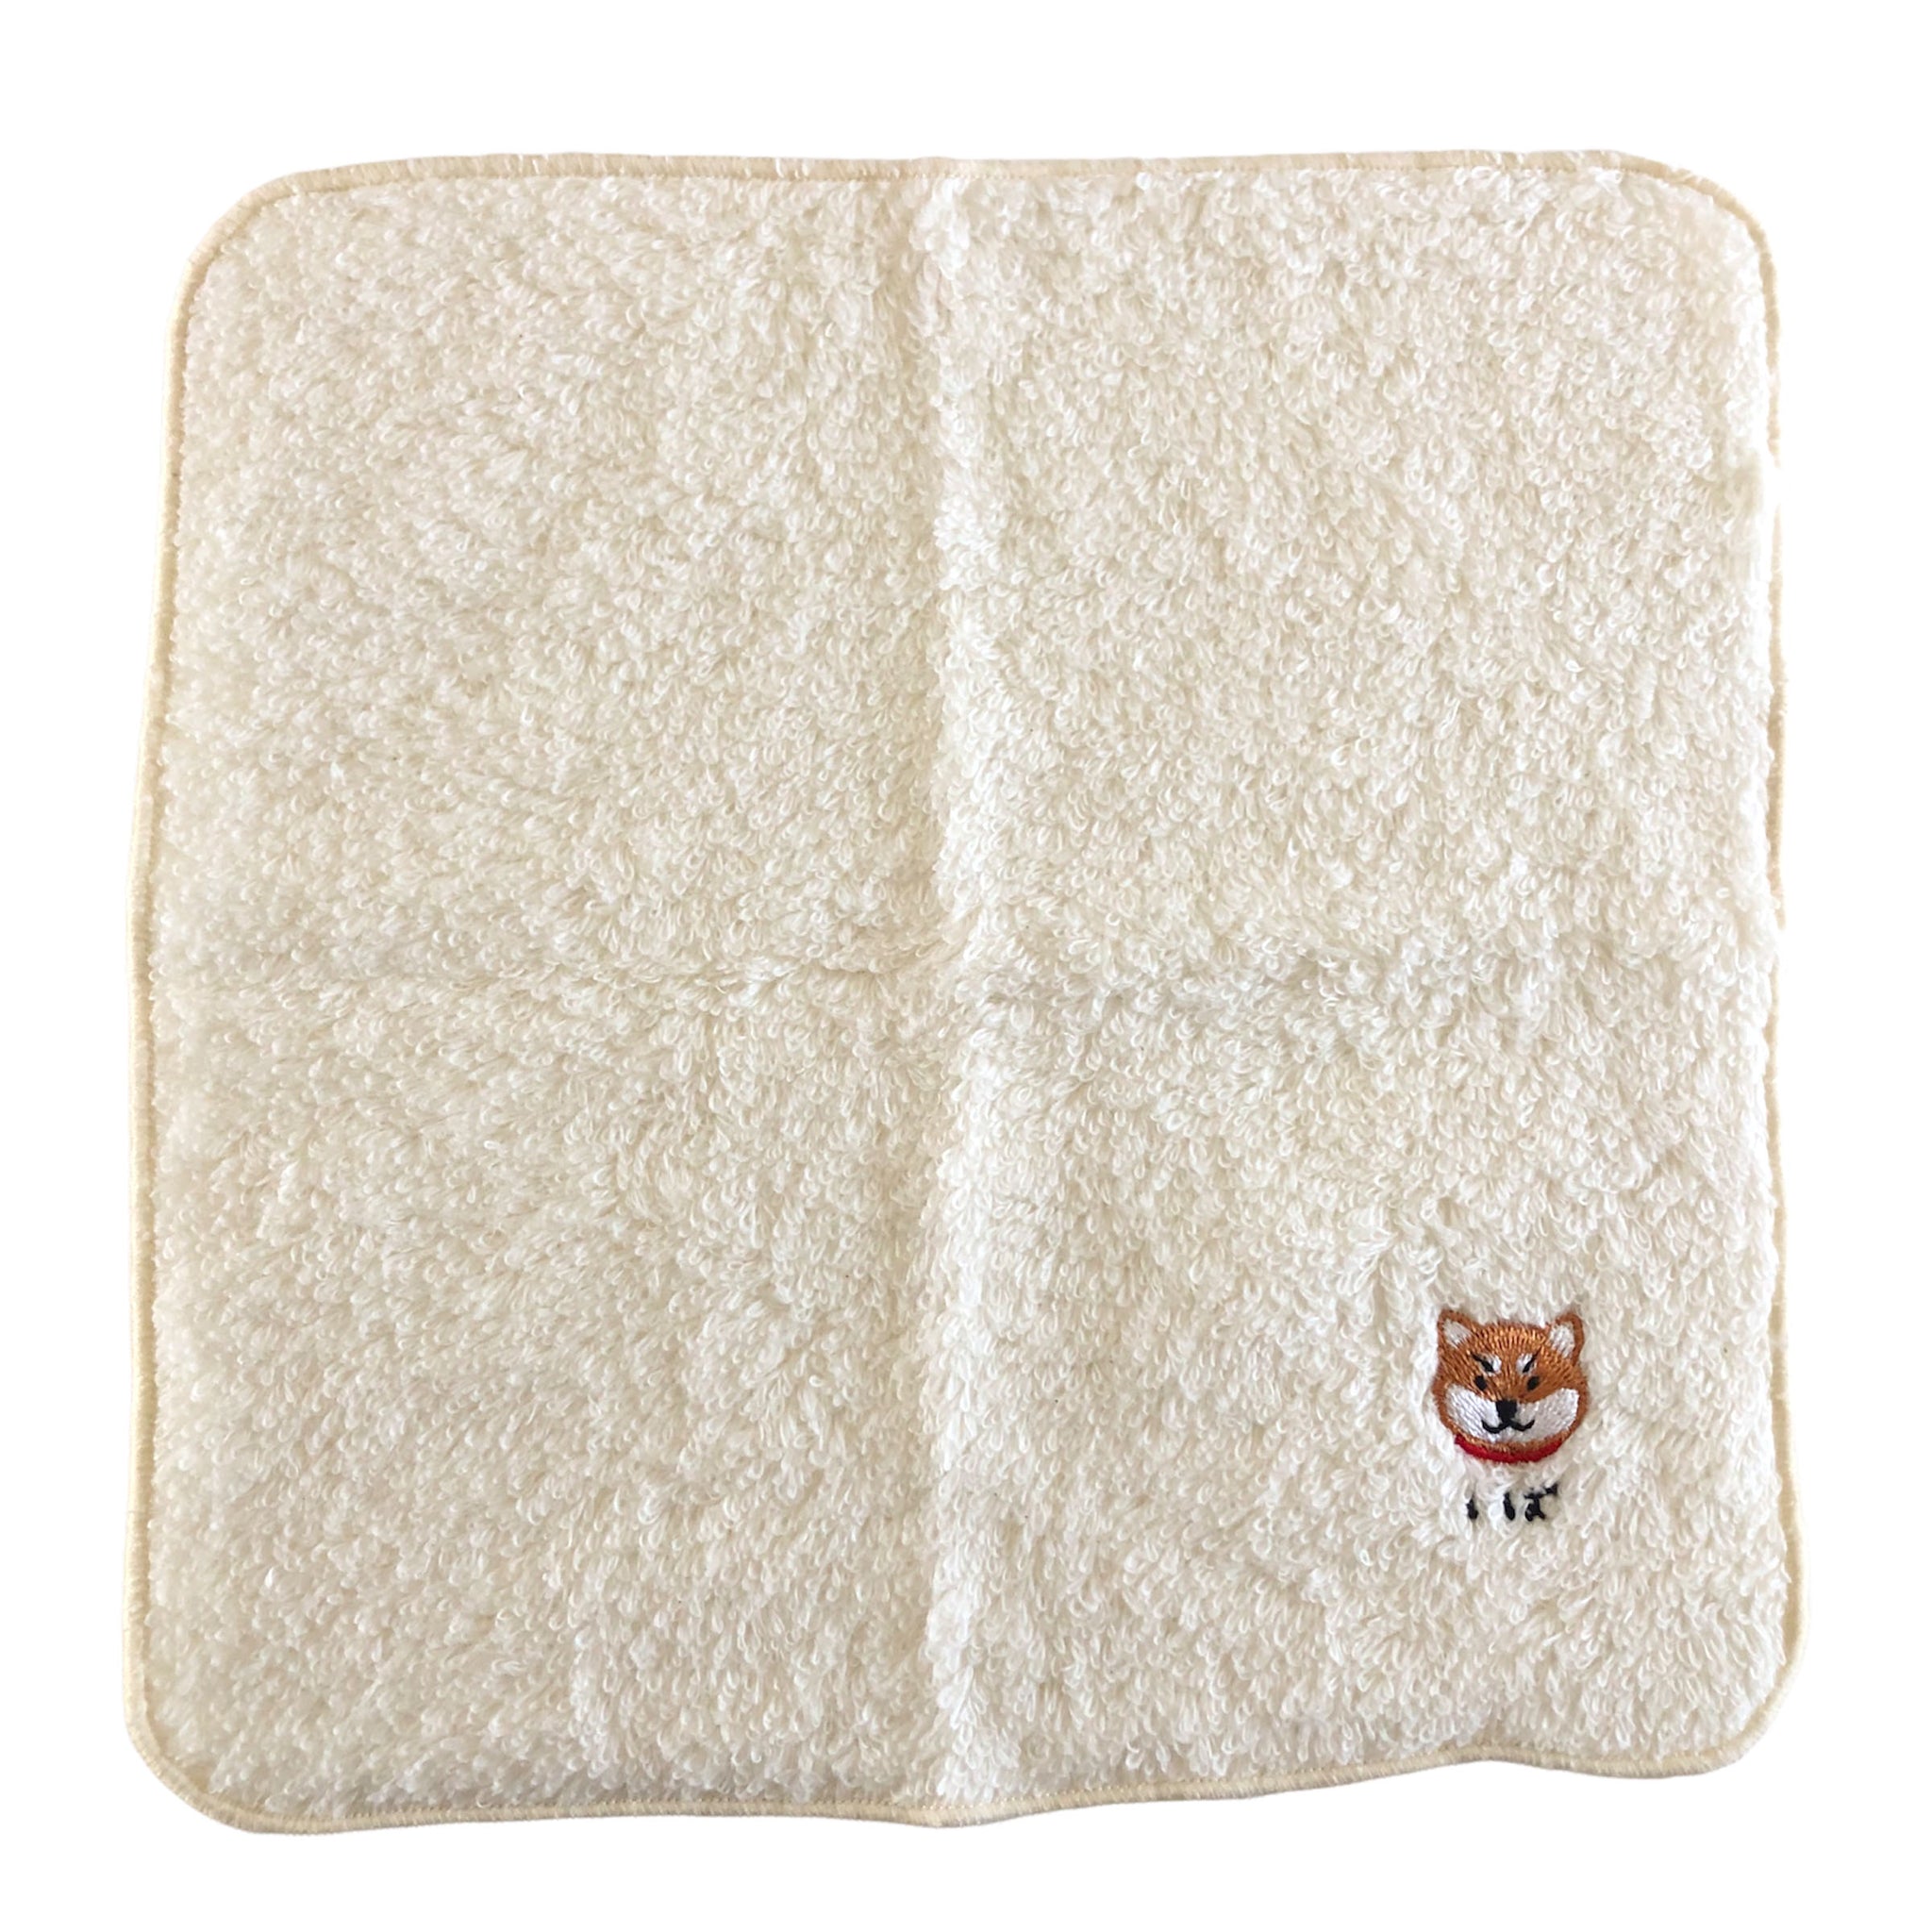 Shiba Inu Red Adorable Fluffy Pile Towel-Like Handkerchief with Embroidered Shiba Inu Face &  "Shiba" Japanese Hiragana